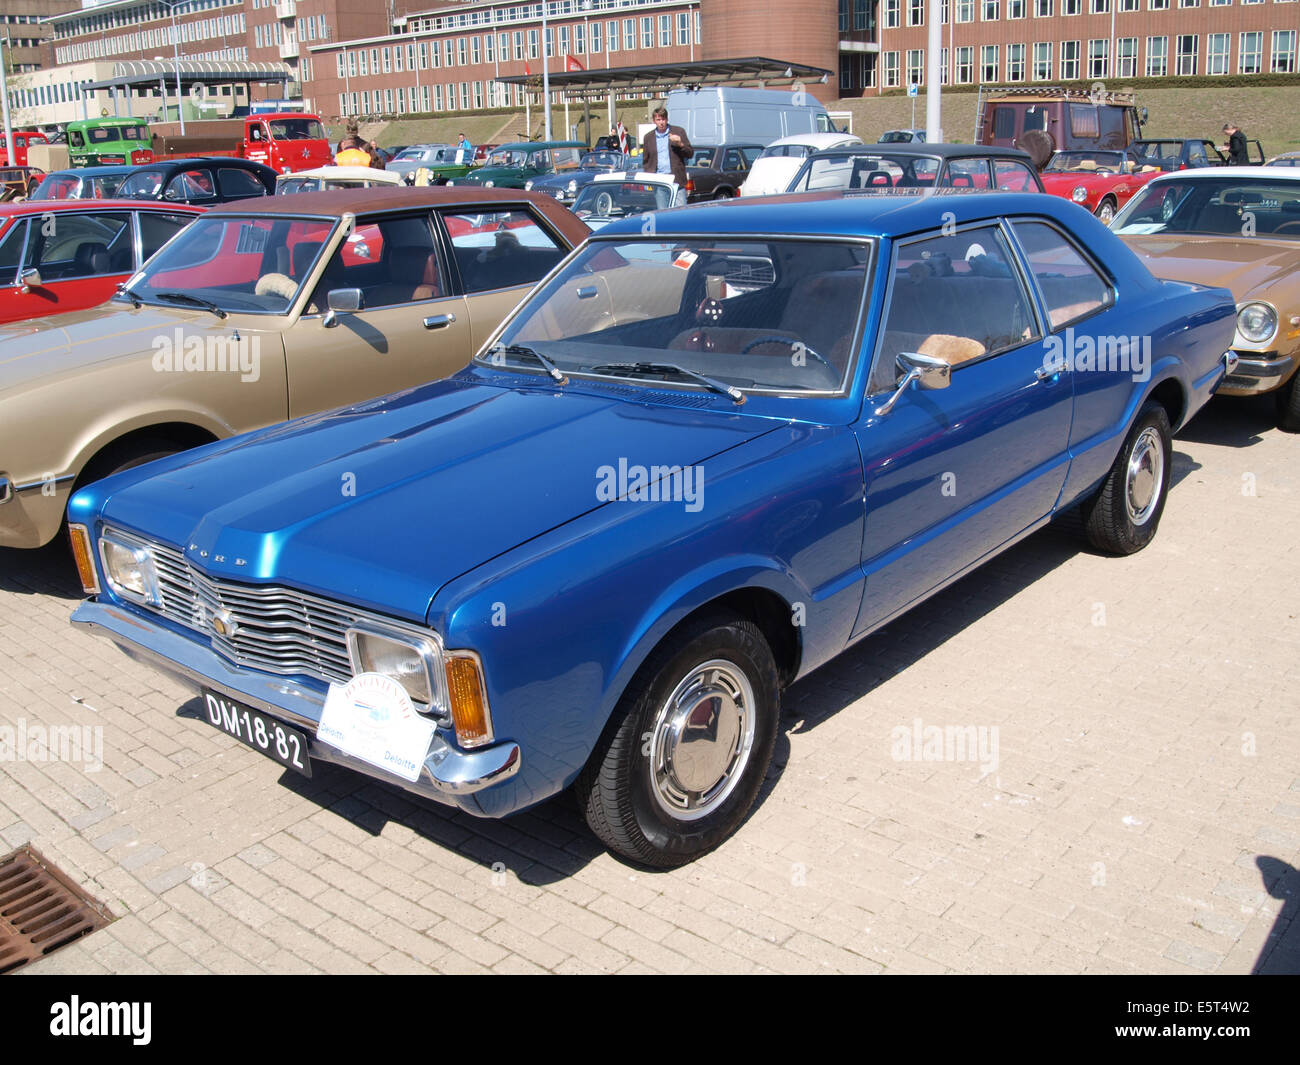 Ford Taunus 1300 L (1972), Dutch licence registration DM-18-82, pic6 Stock Photo